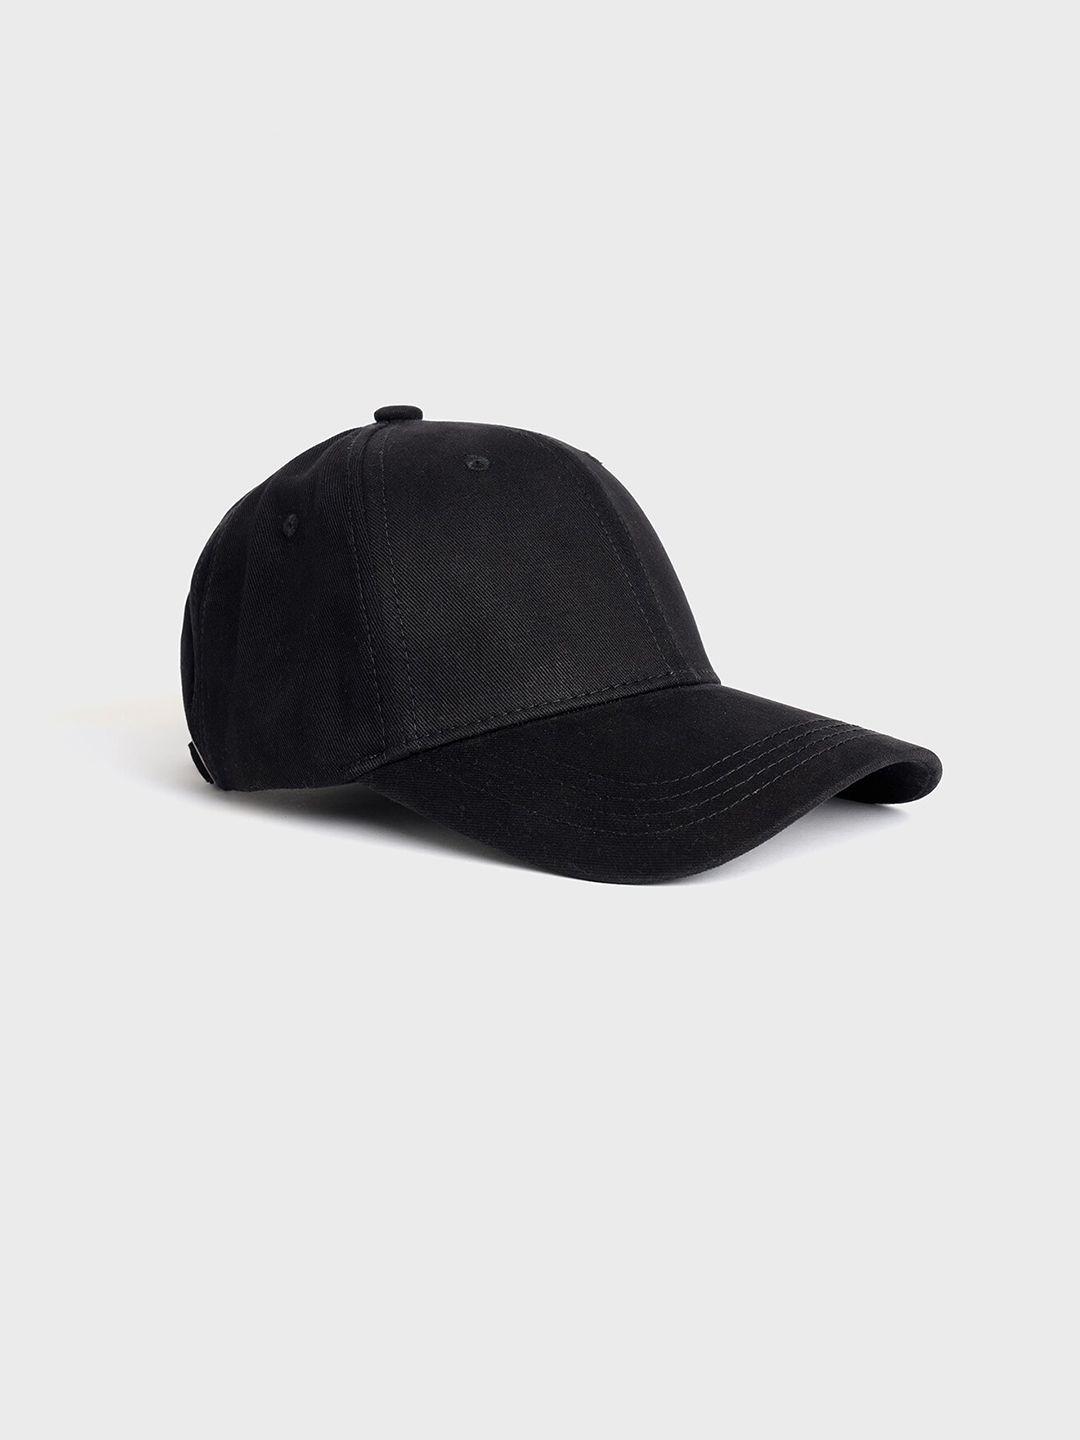 bewakoof unisex black cotton baseball cap